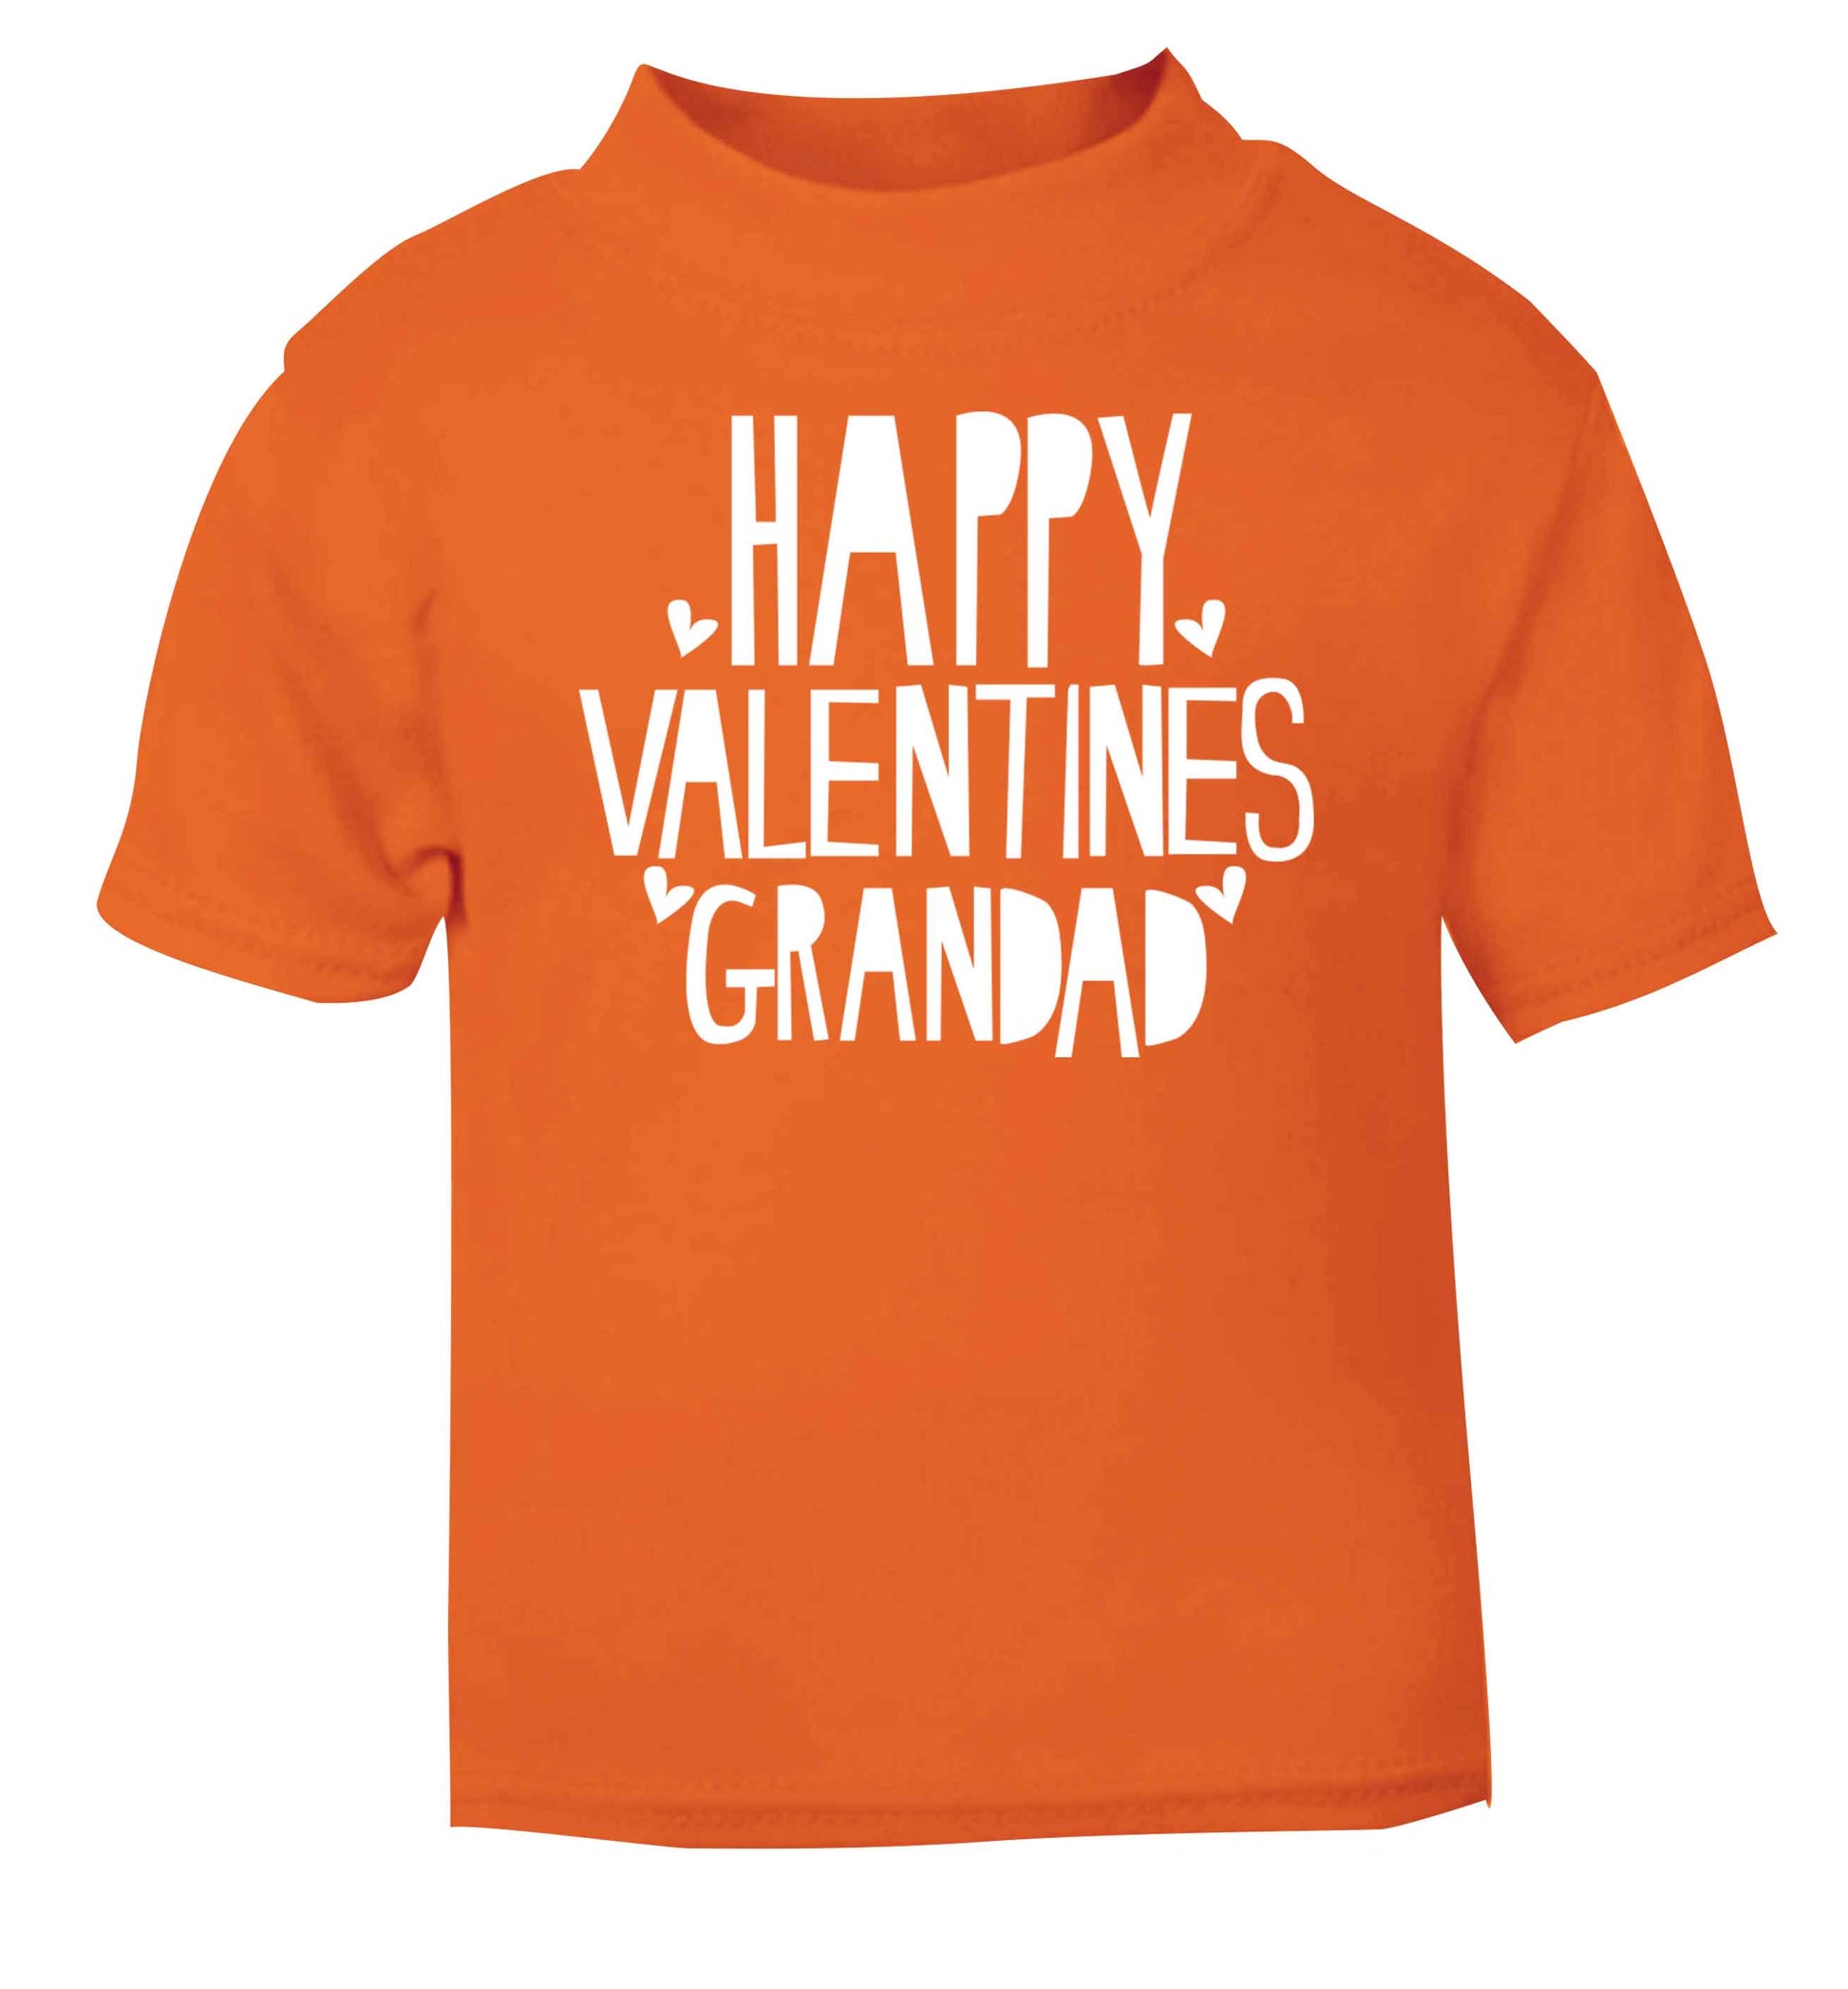 Happy valentines grandad orange baby toddler Tshirt 2 Years